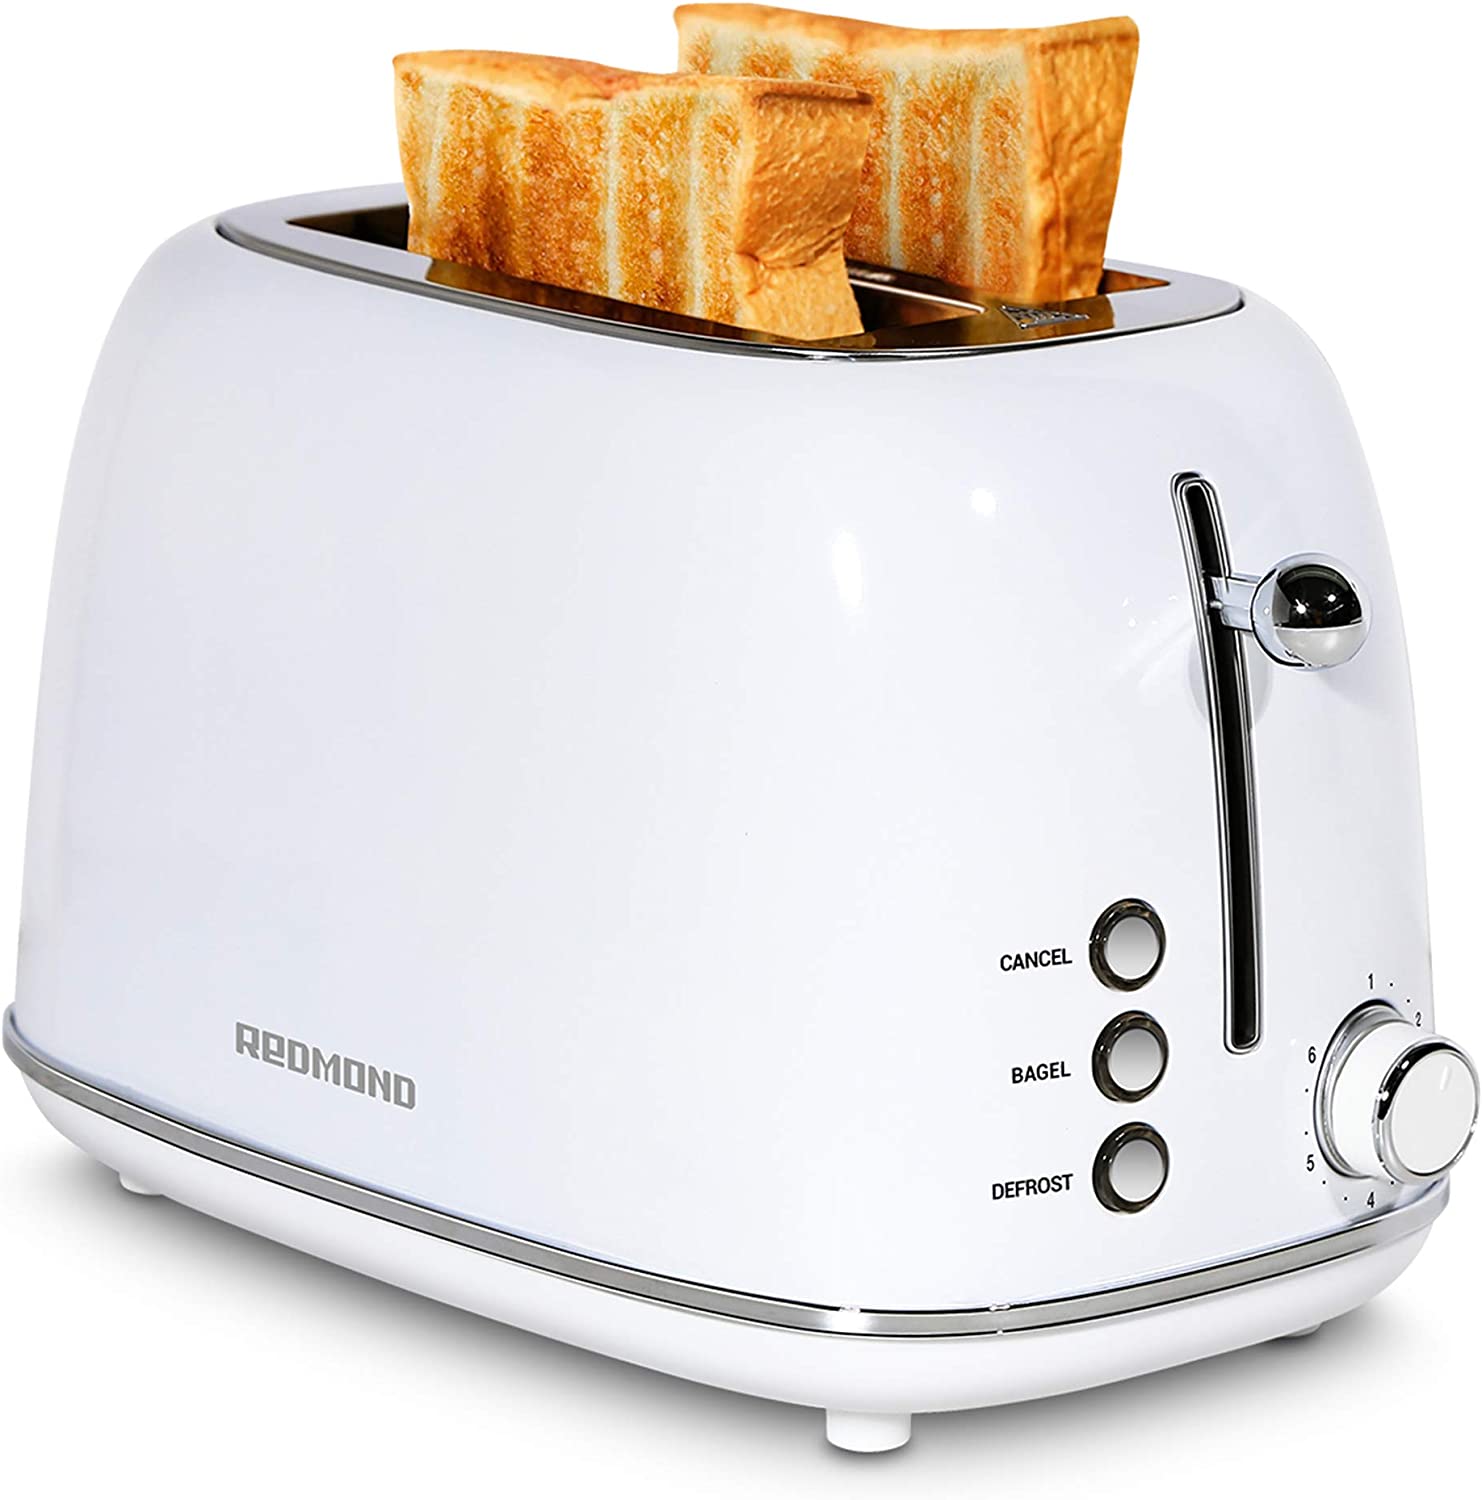 REDMOND 6-Setting Non-Toxic Pop-Up Toaster, 2-Slice